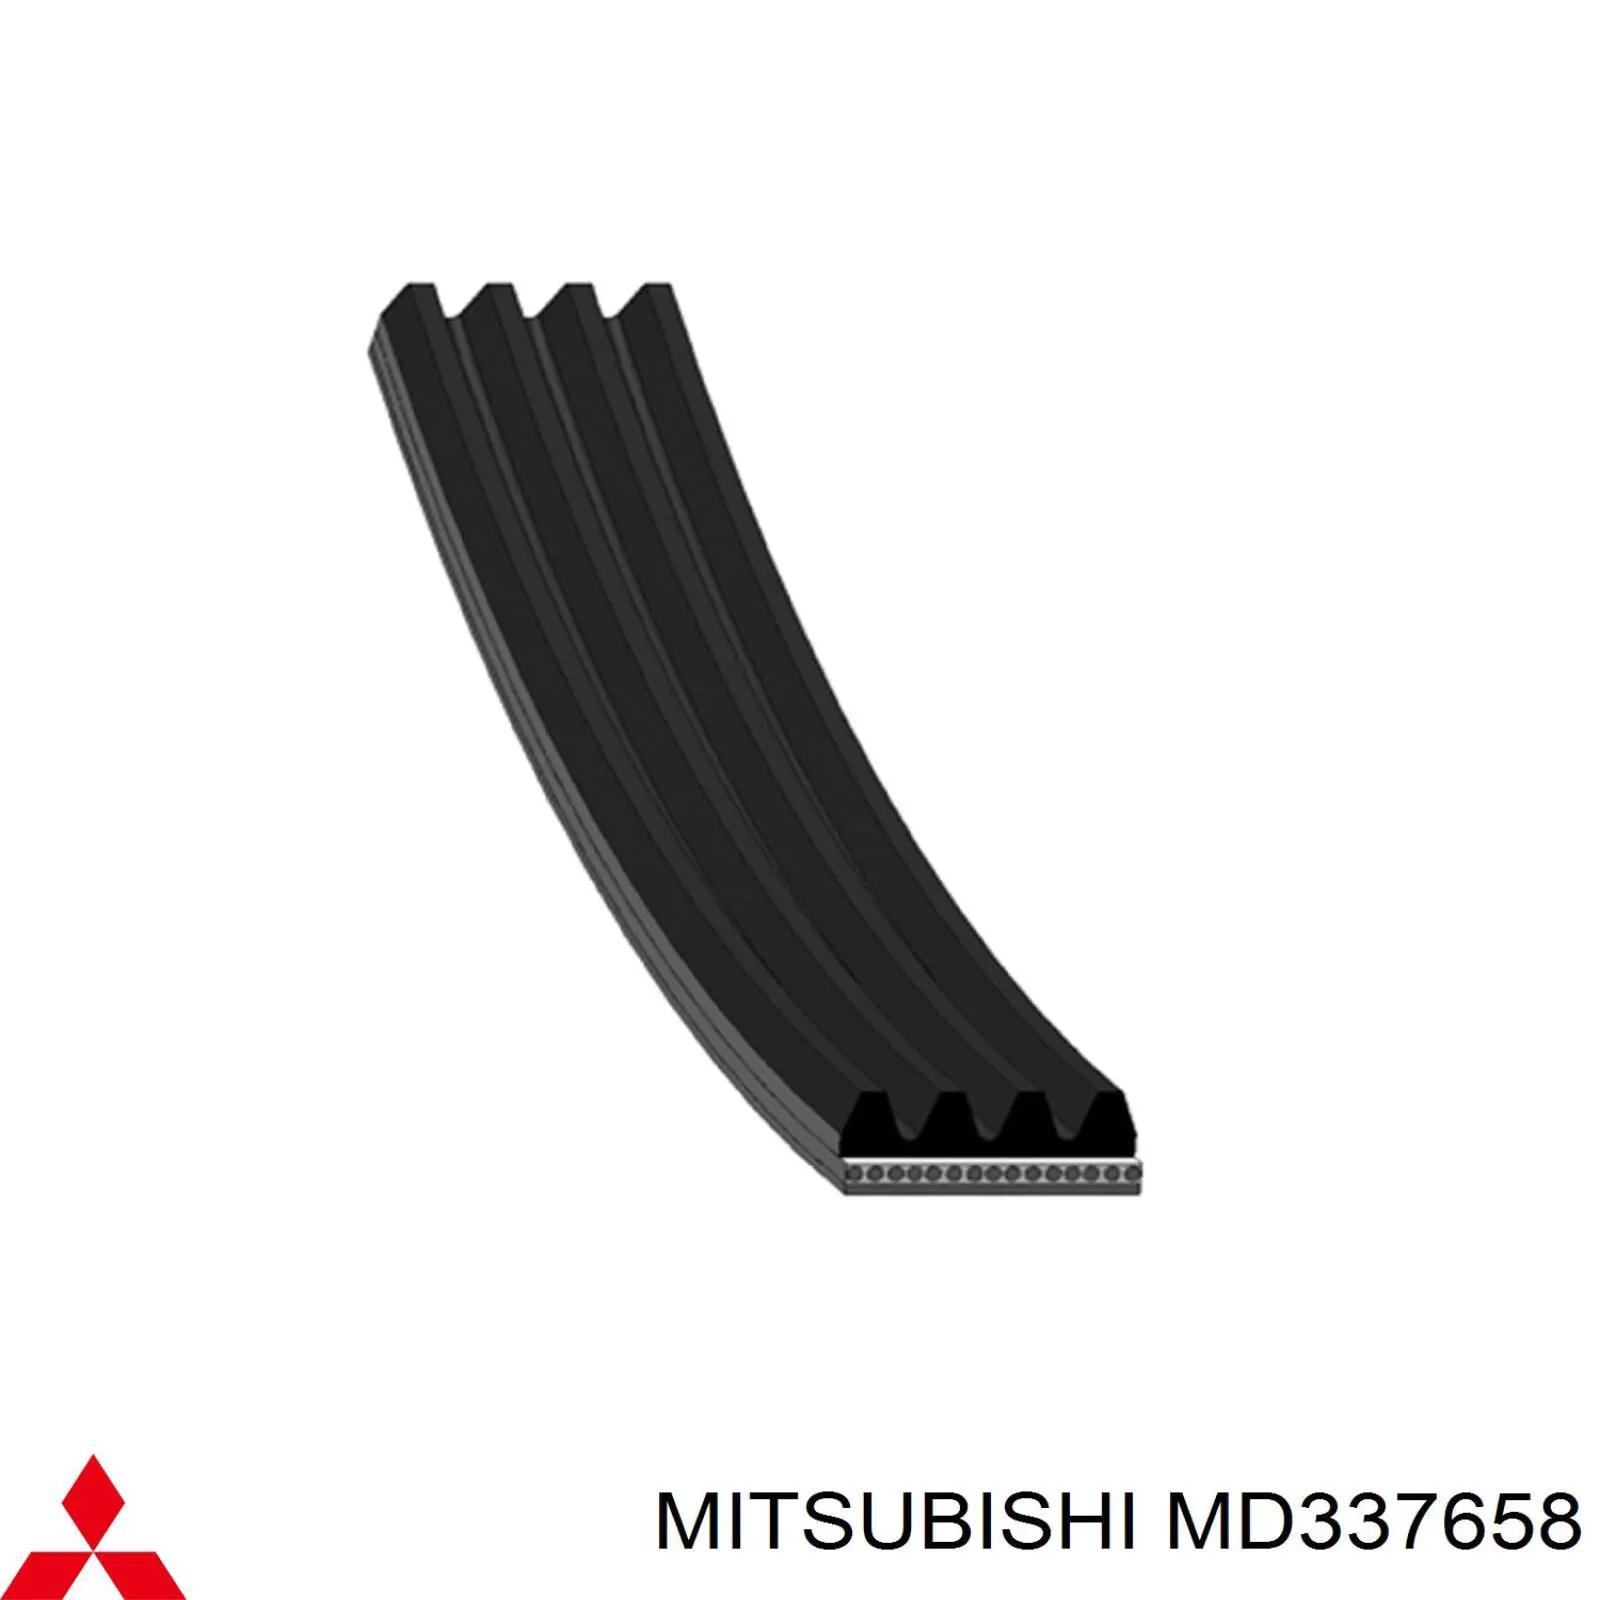 MD337658 Mitsubishi ремень генератора